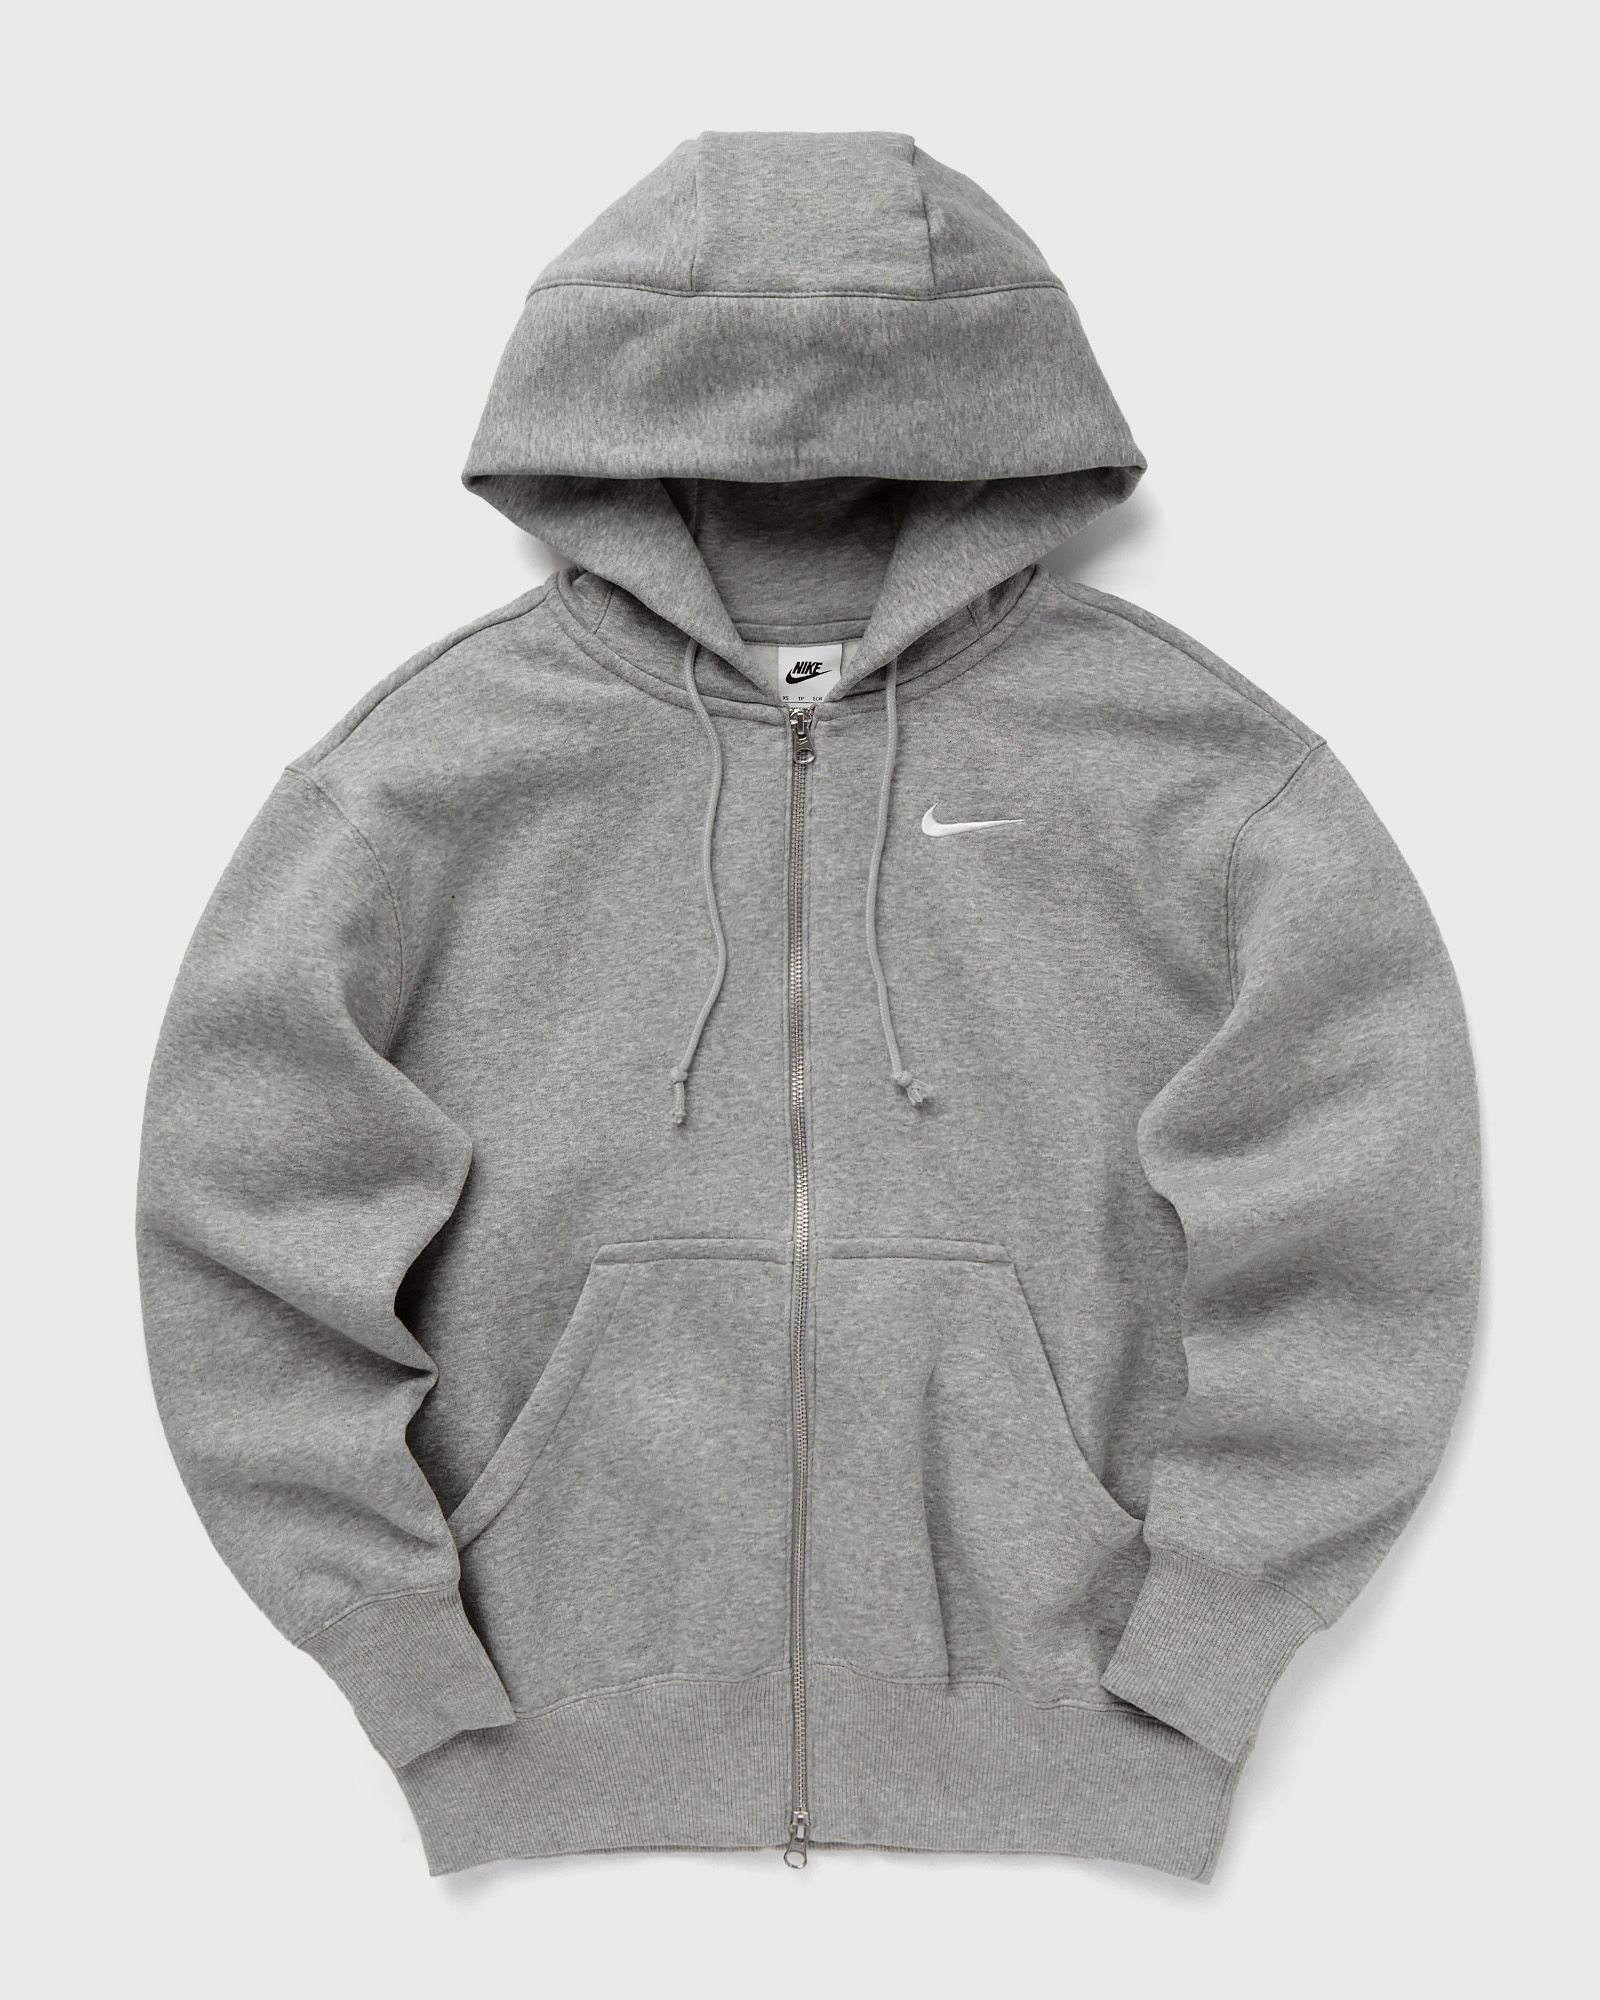 Nike WMNS Phoenix Fleece Oversized Full-Zip Hoodie women Hoodies|Zippers grey in Größe:S von Nike